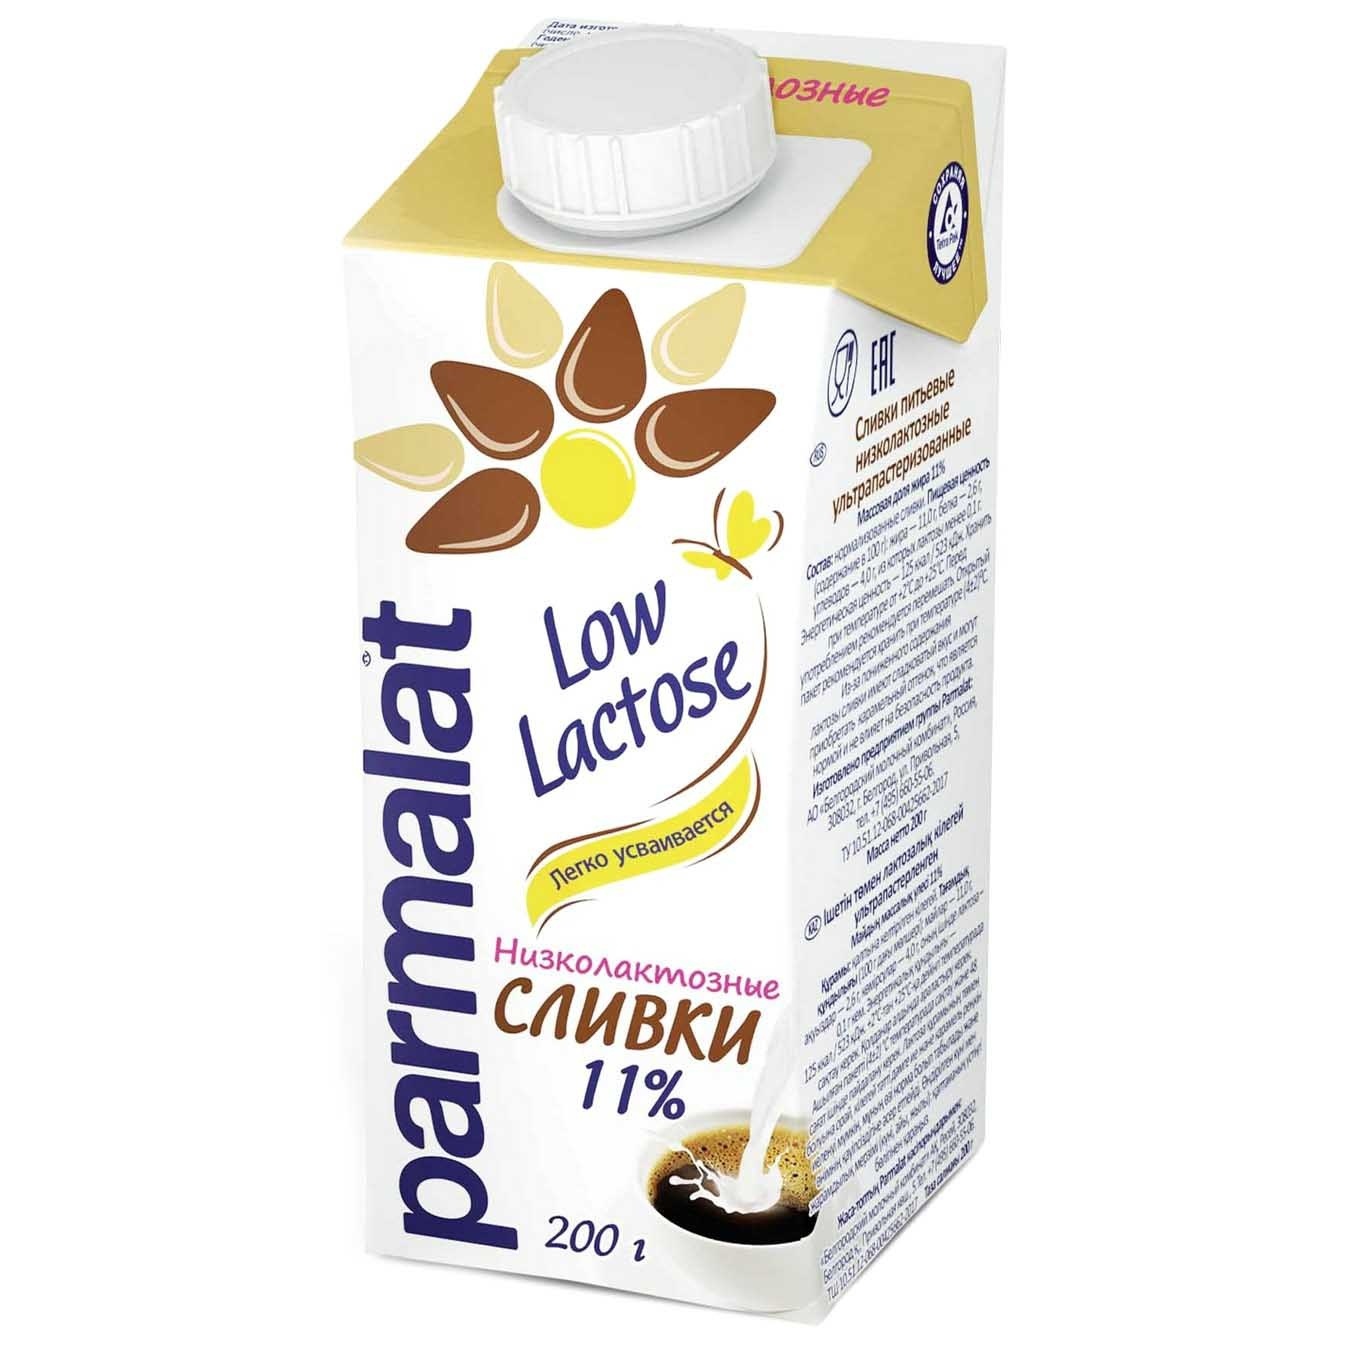   . /. . "Parmalat" 11% 200  